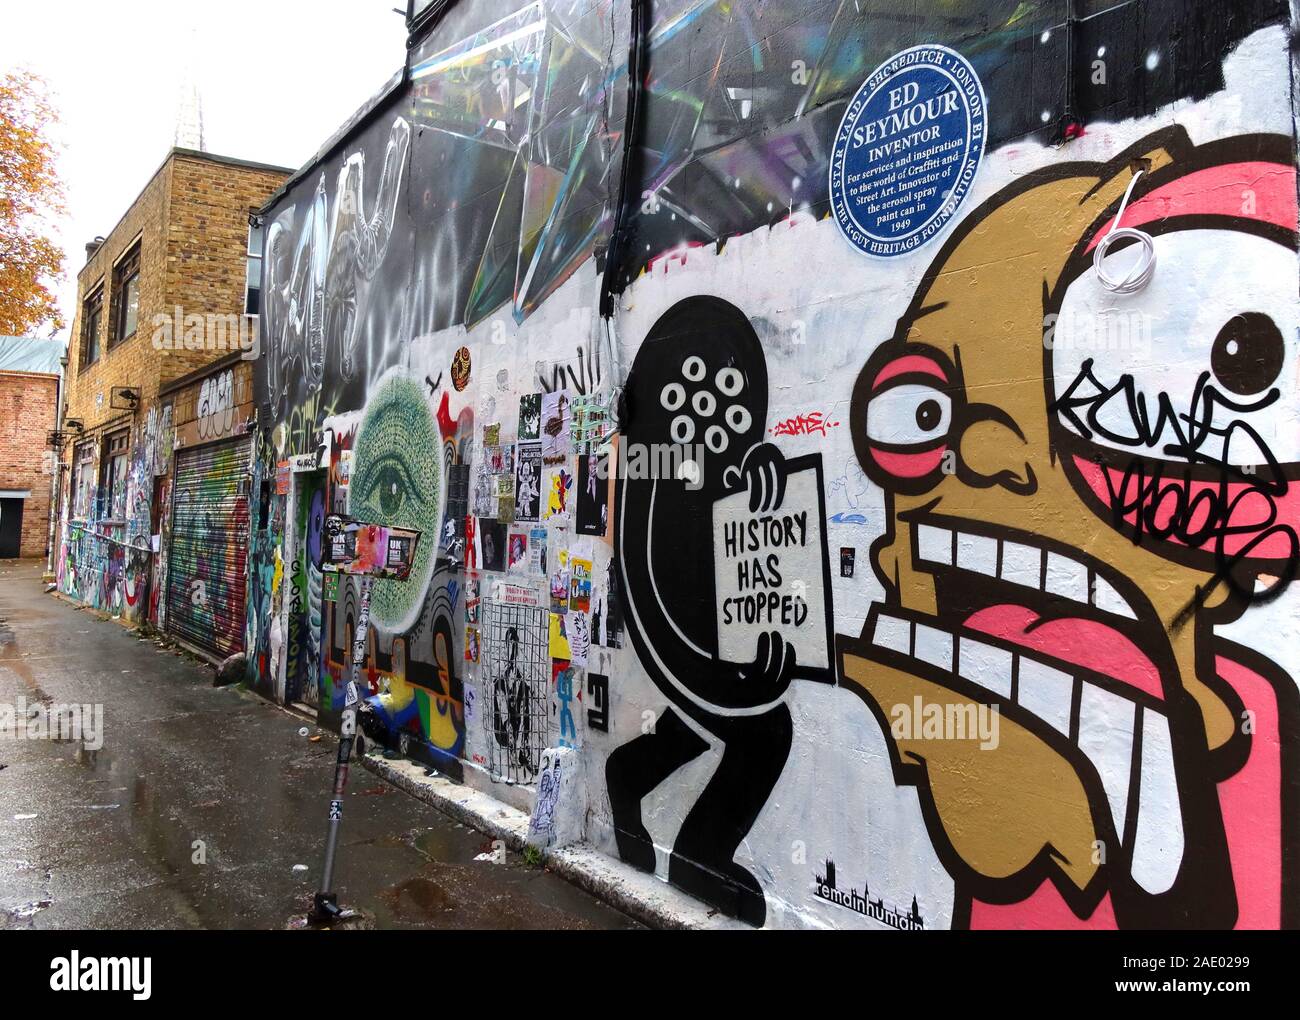 Geschichte hat aufgehört,Ed Seymour,Brick Lane,Kunst und Graffiti,Shoreditch,Tower Hamlets,East End,London,South East,England,UK, E1 6QL Stockfoto